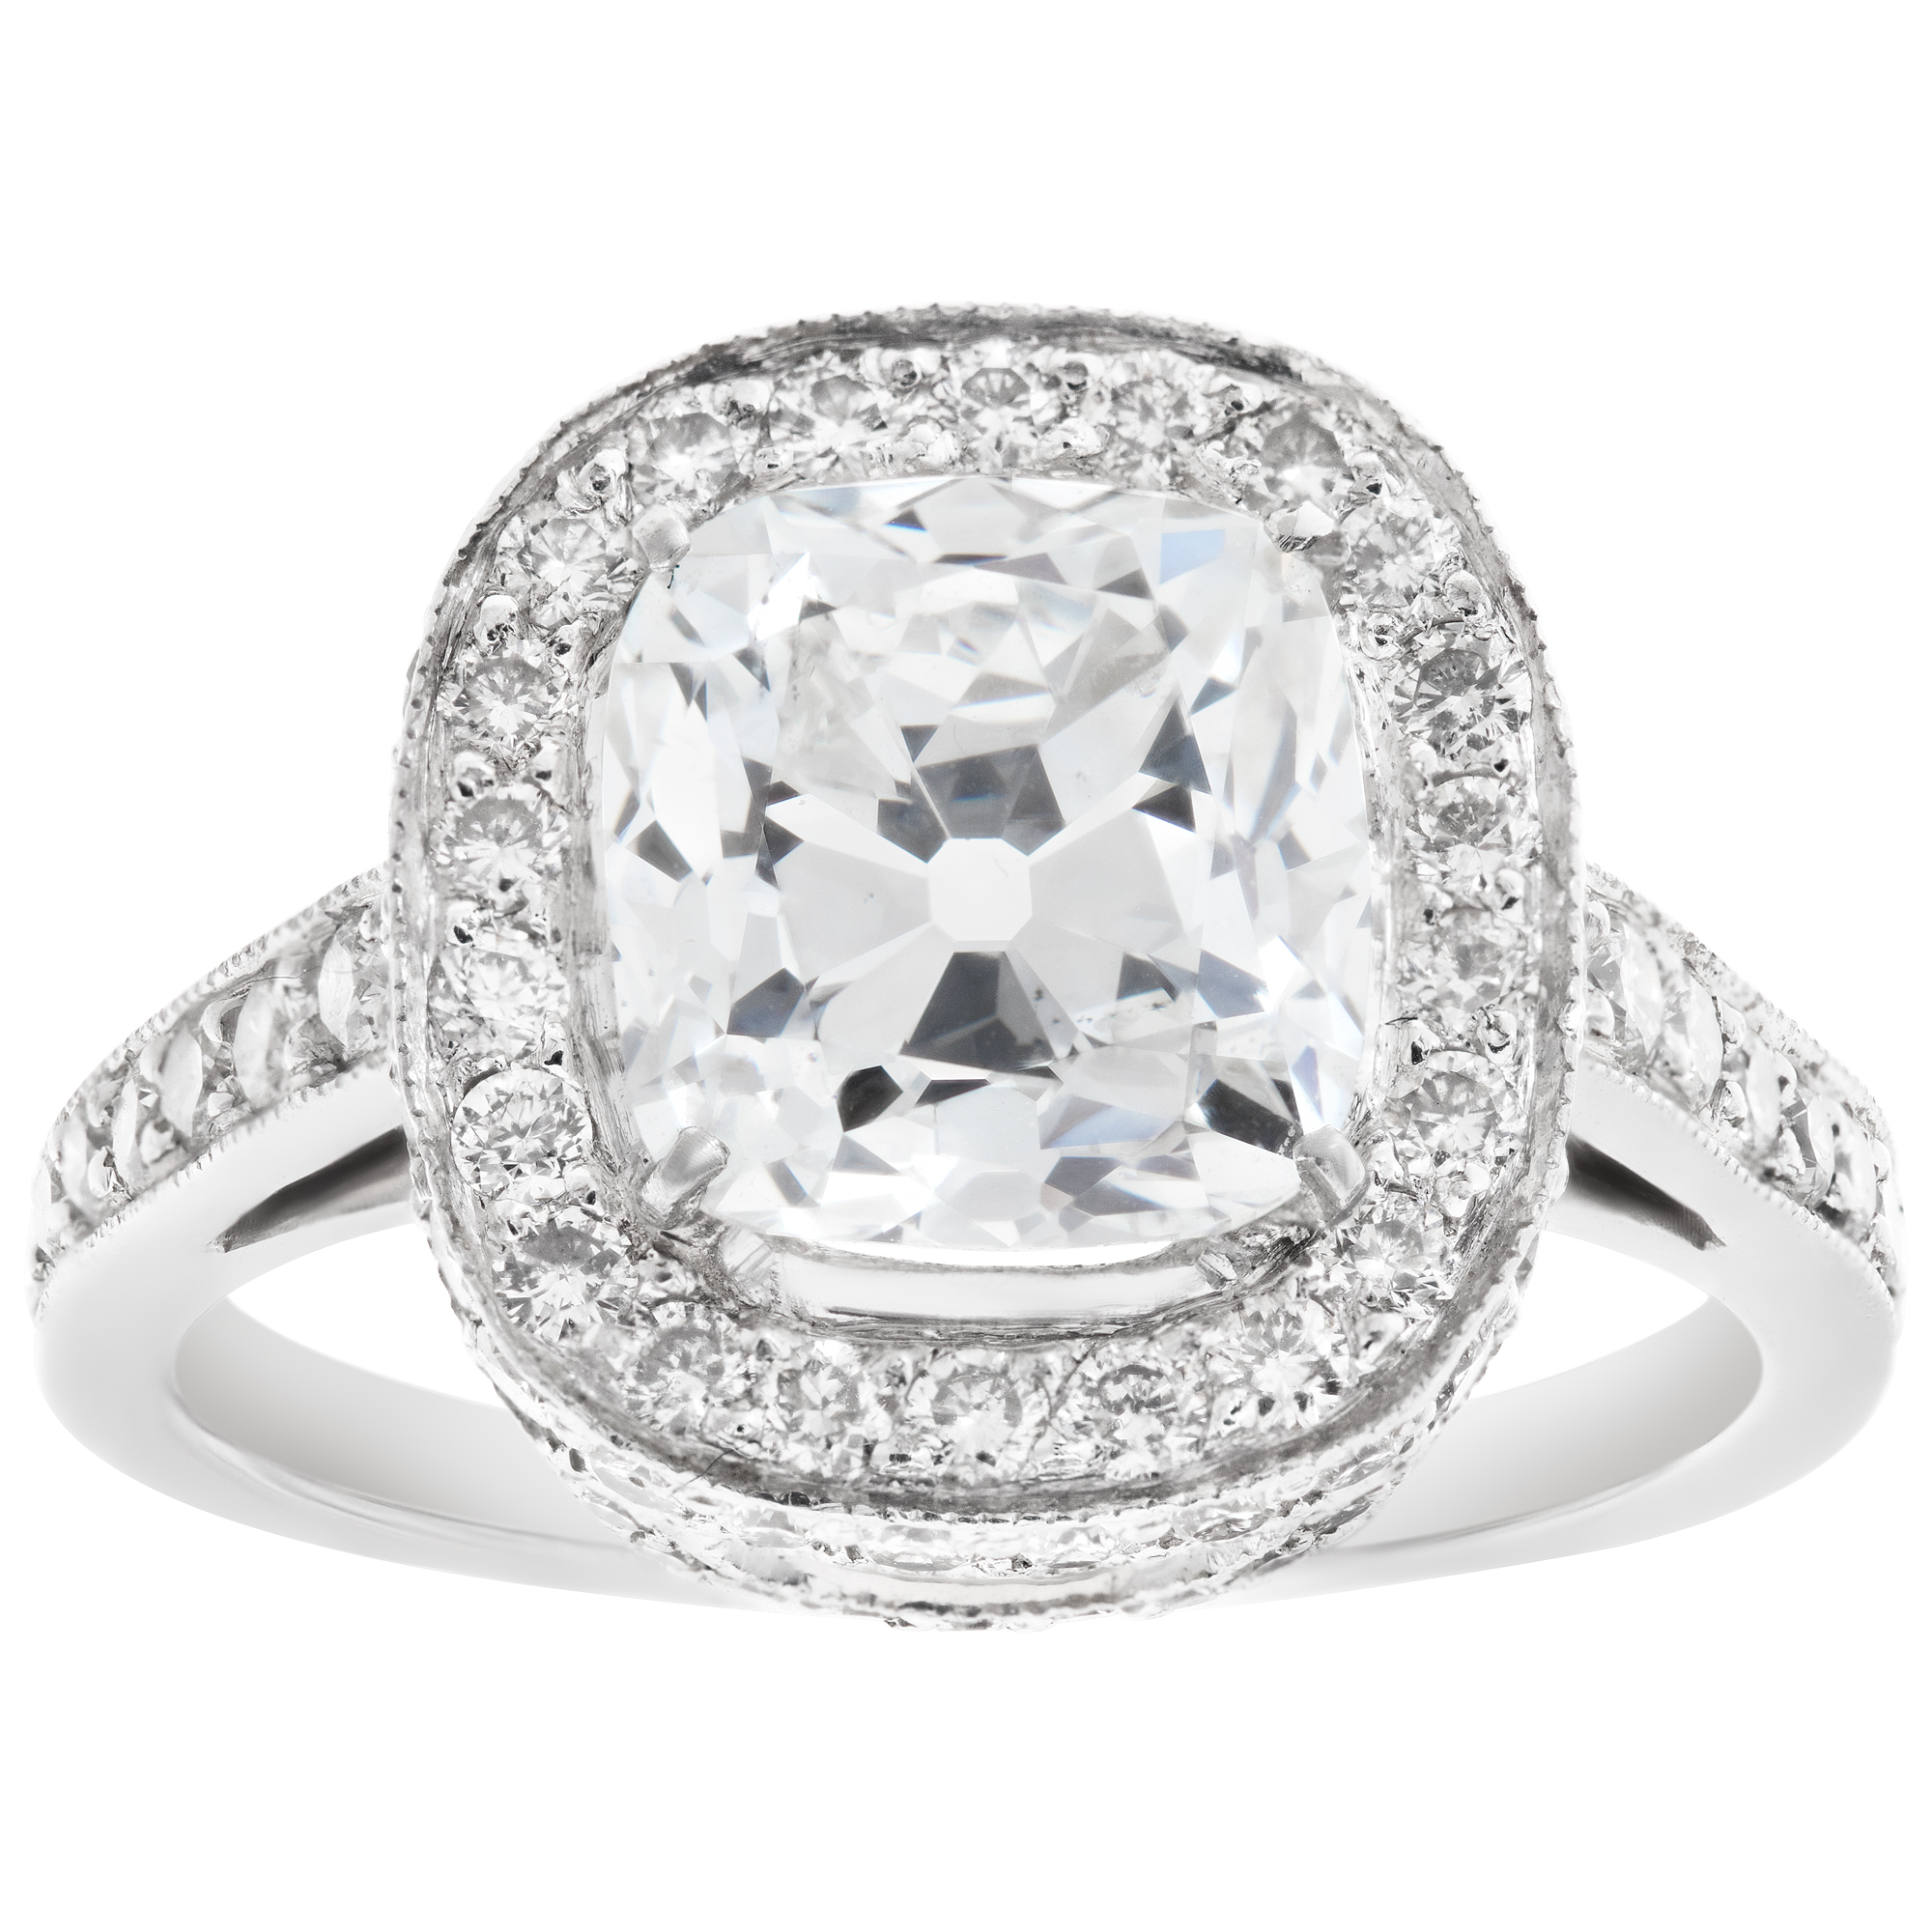 GIA certified cushion brilliant cut diamond 3.02 carat (I color, SI1 clarity) ring image 1